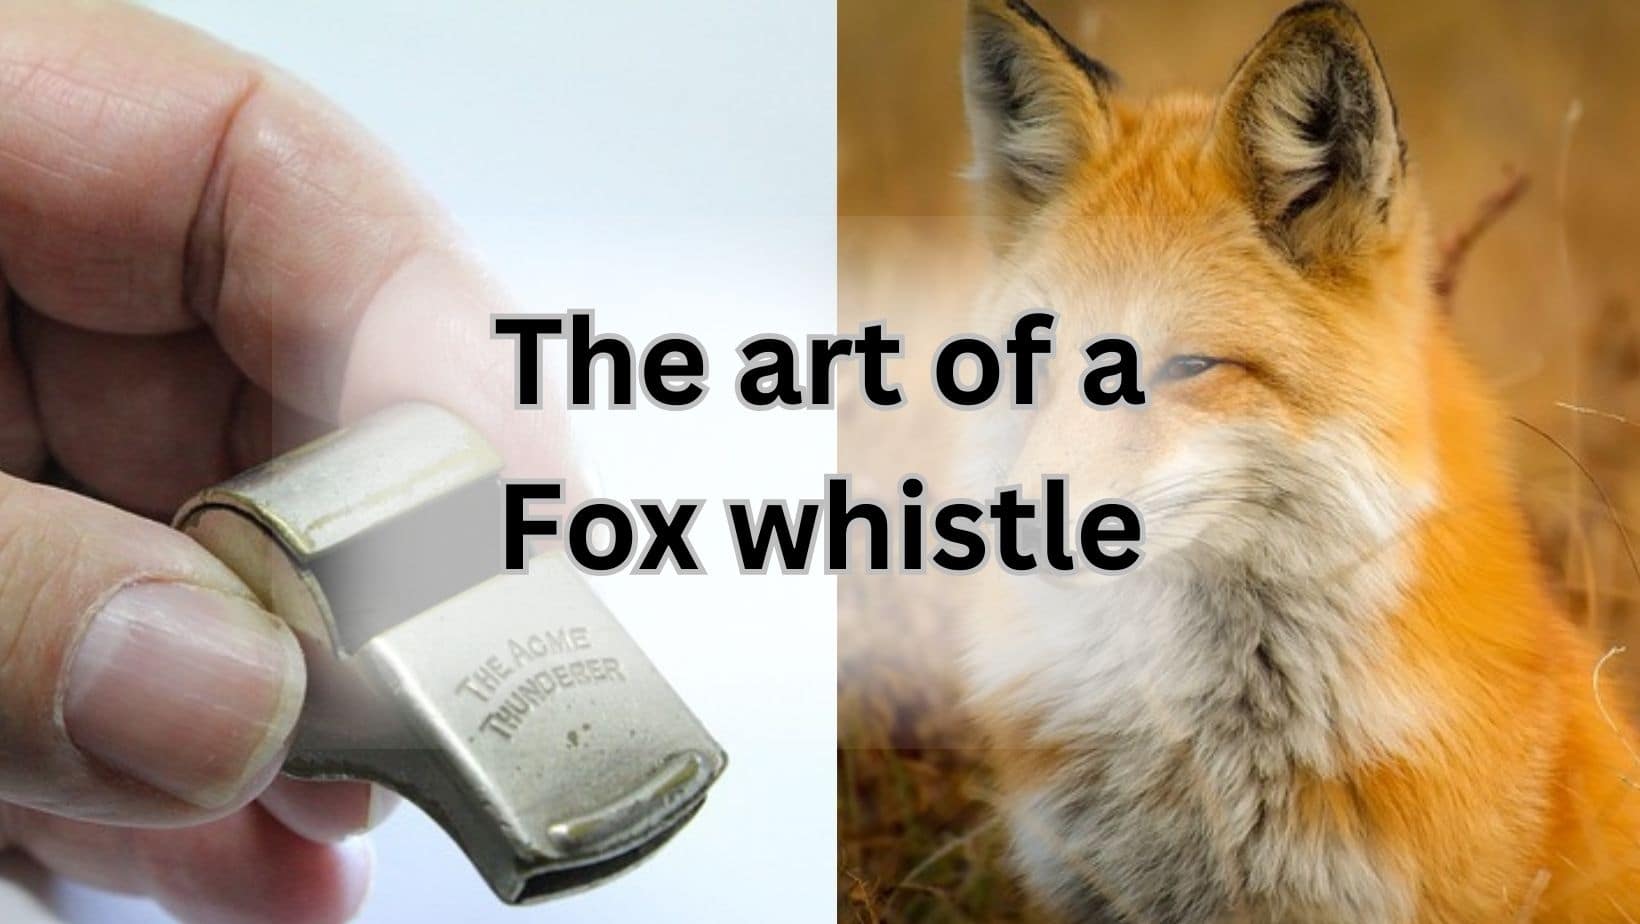 Fox whistling